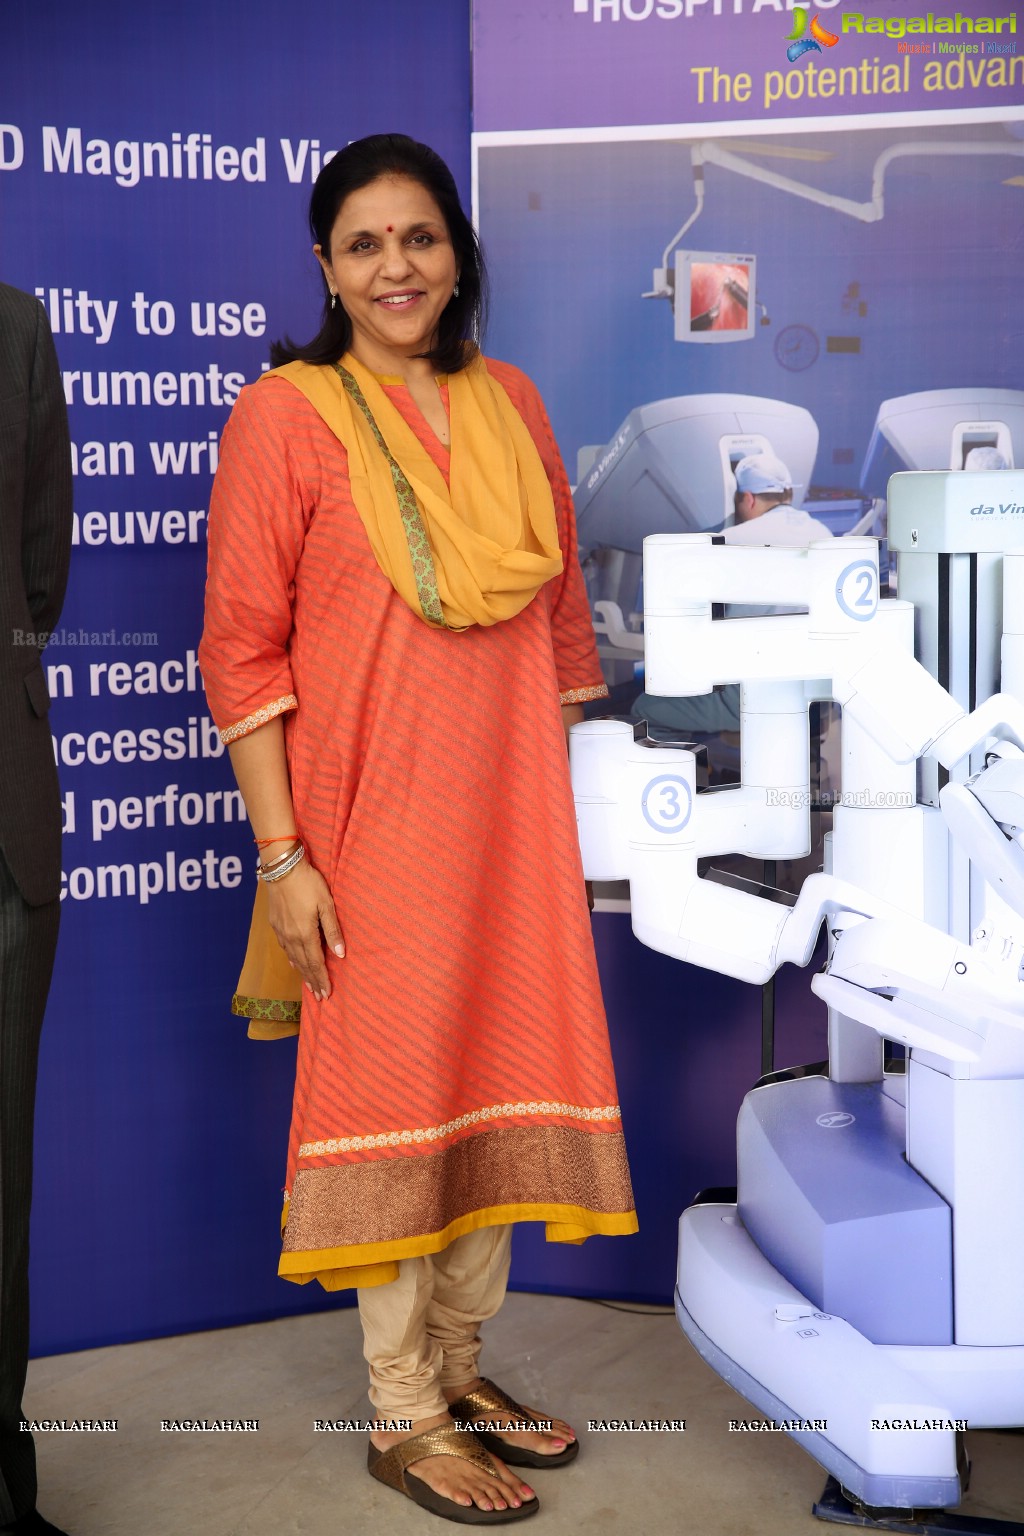 Robotic Surgery Workshop at Apollo Hospitals, Jubilee Hills, Hyderabad